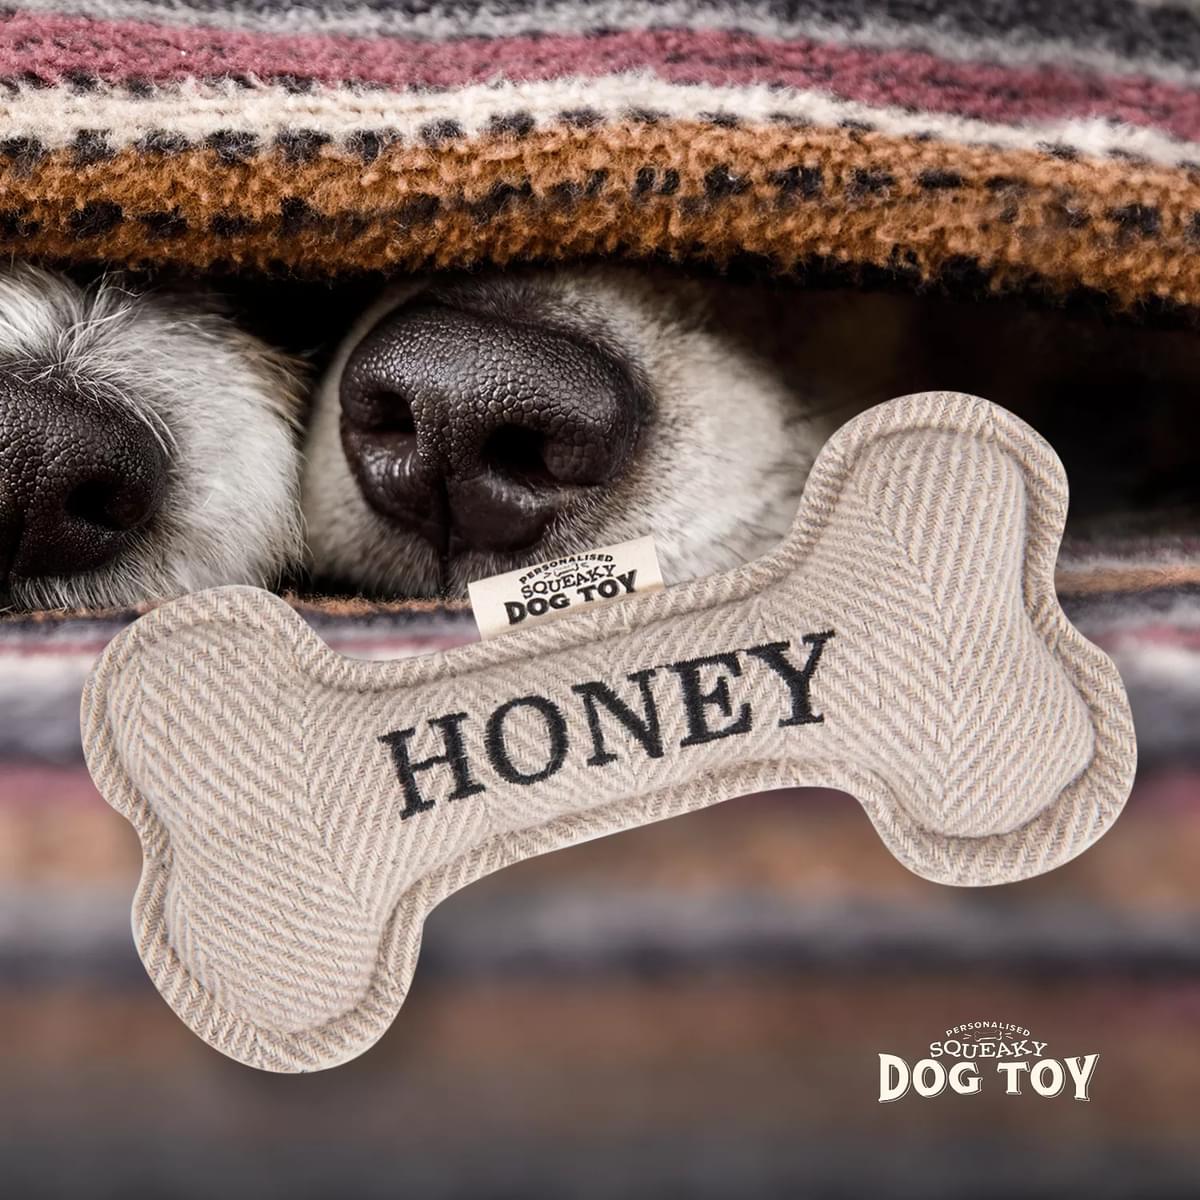 Named Squeaky Dog Toy- Honey. Bone shaped herringbone tweed pattern dog toy. 